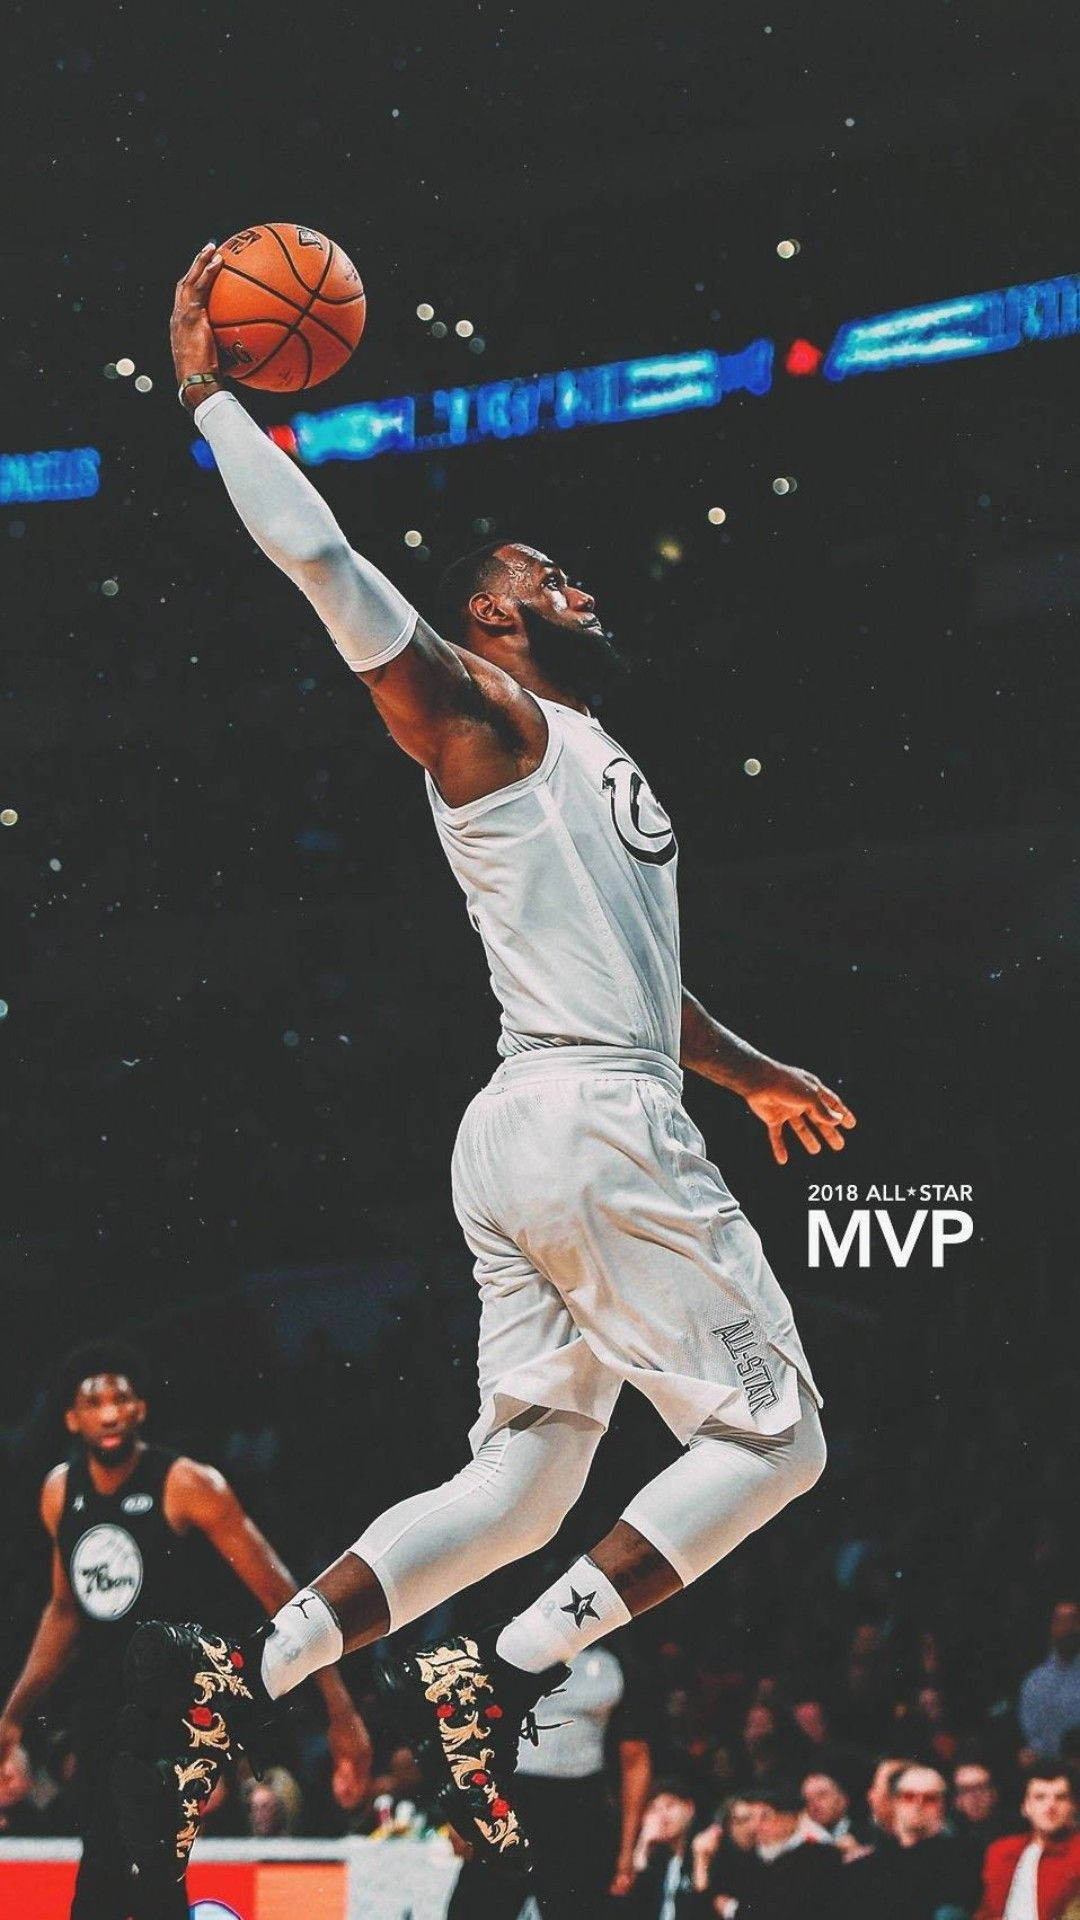 Download Lebron James slams in the 2018 NBA All Star MVP Dunk Wallpaper